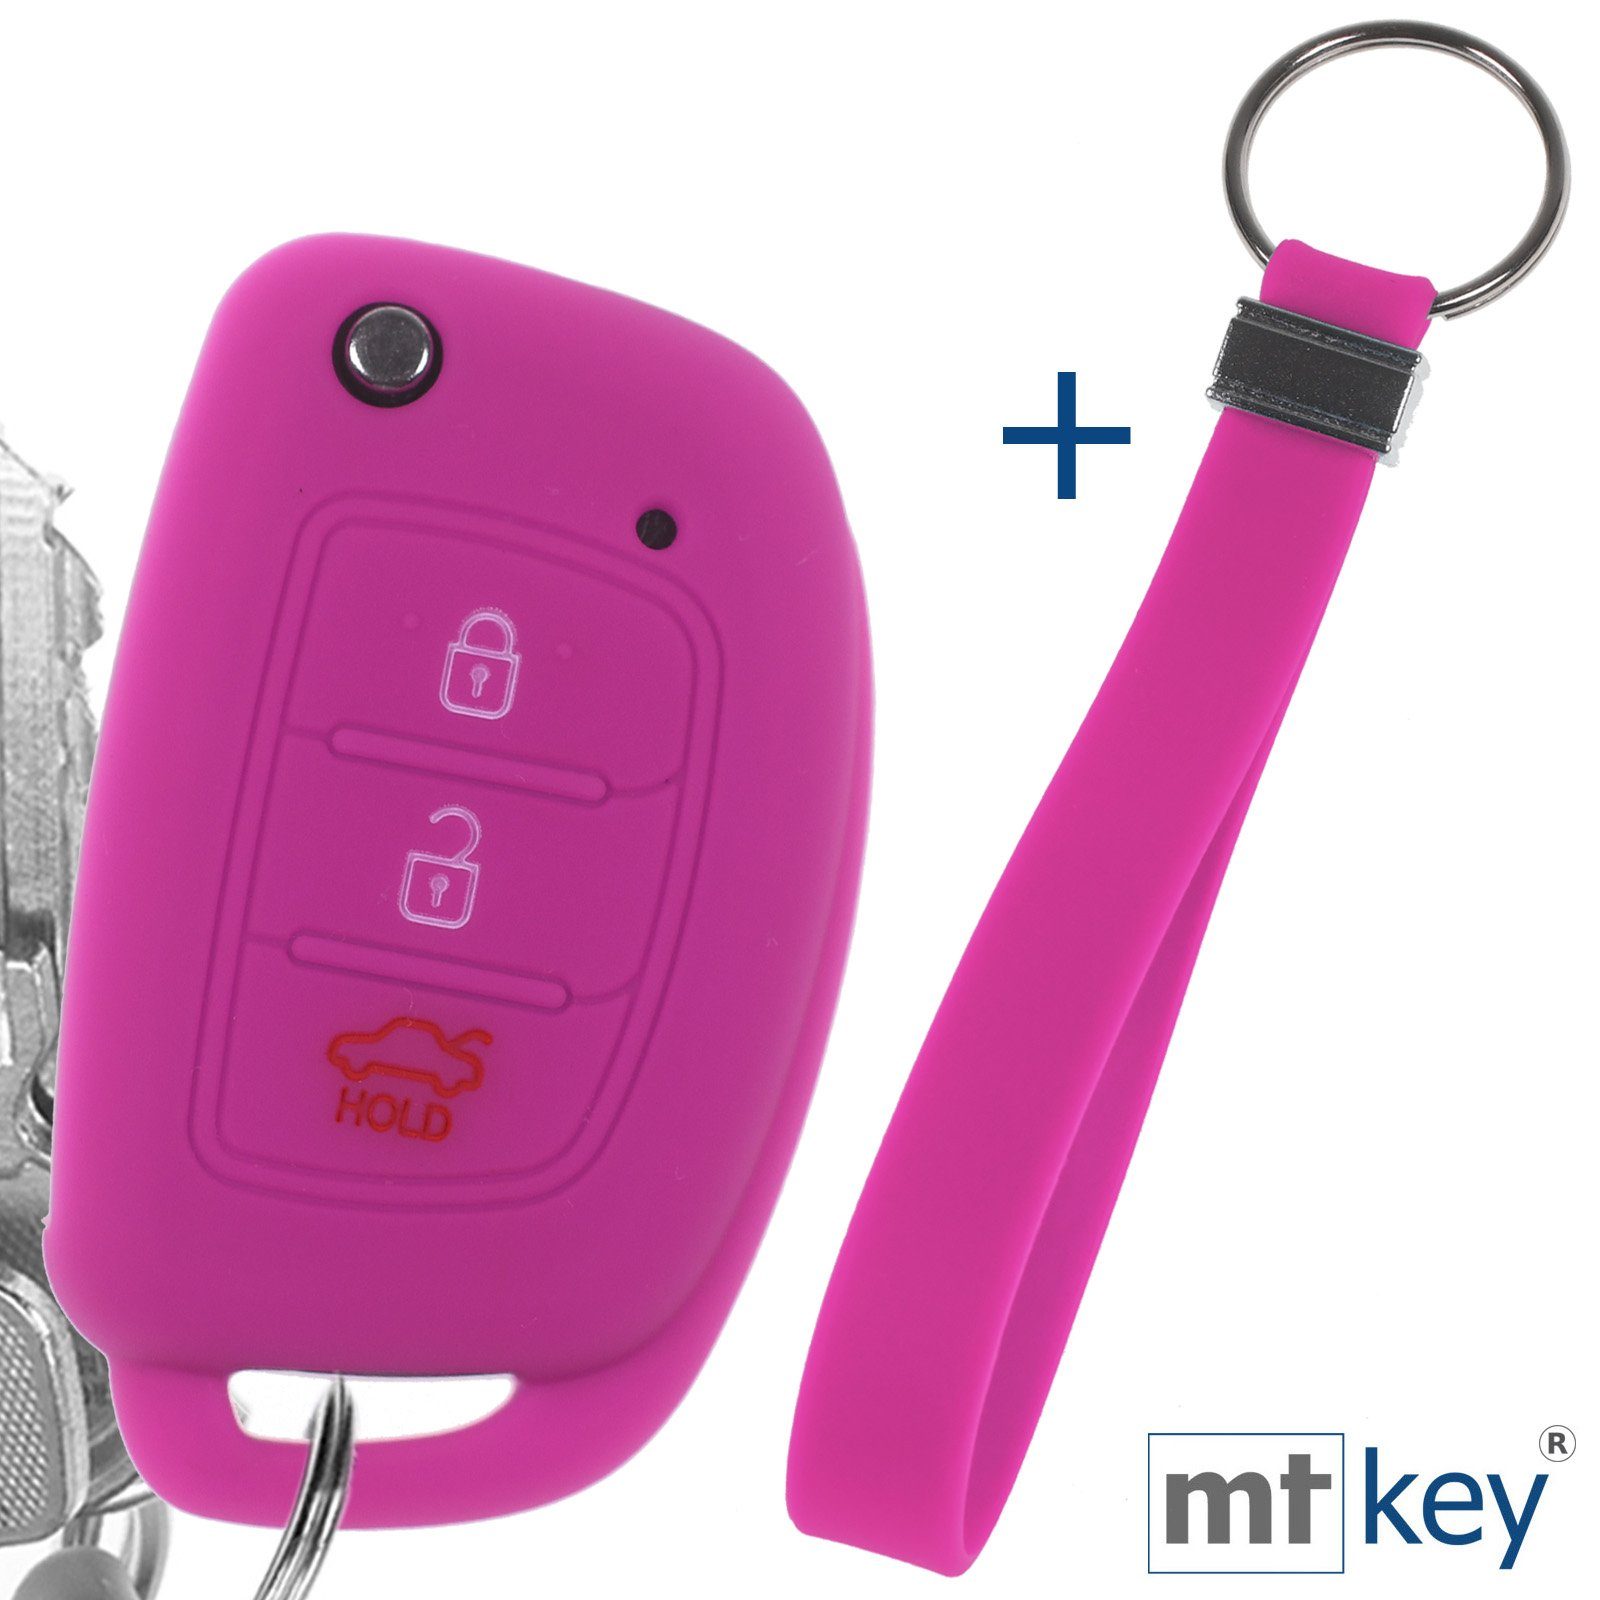 mt-key Schlüsseltasche Autoschlüssel Silikon Schutzhülle im Wabe Design Pink + Schlüsselband, für Hyundai i10 i20 ix25 ix35 i40 Accent Tucson 3 Knopf Klappschlüssel